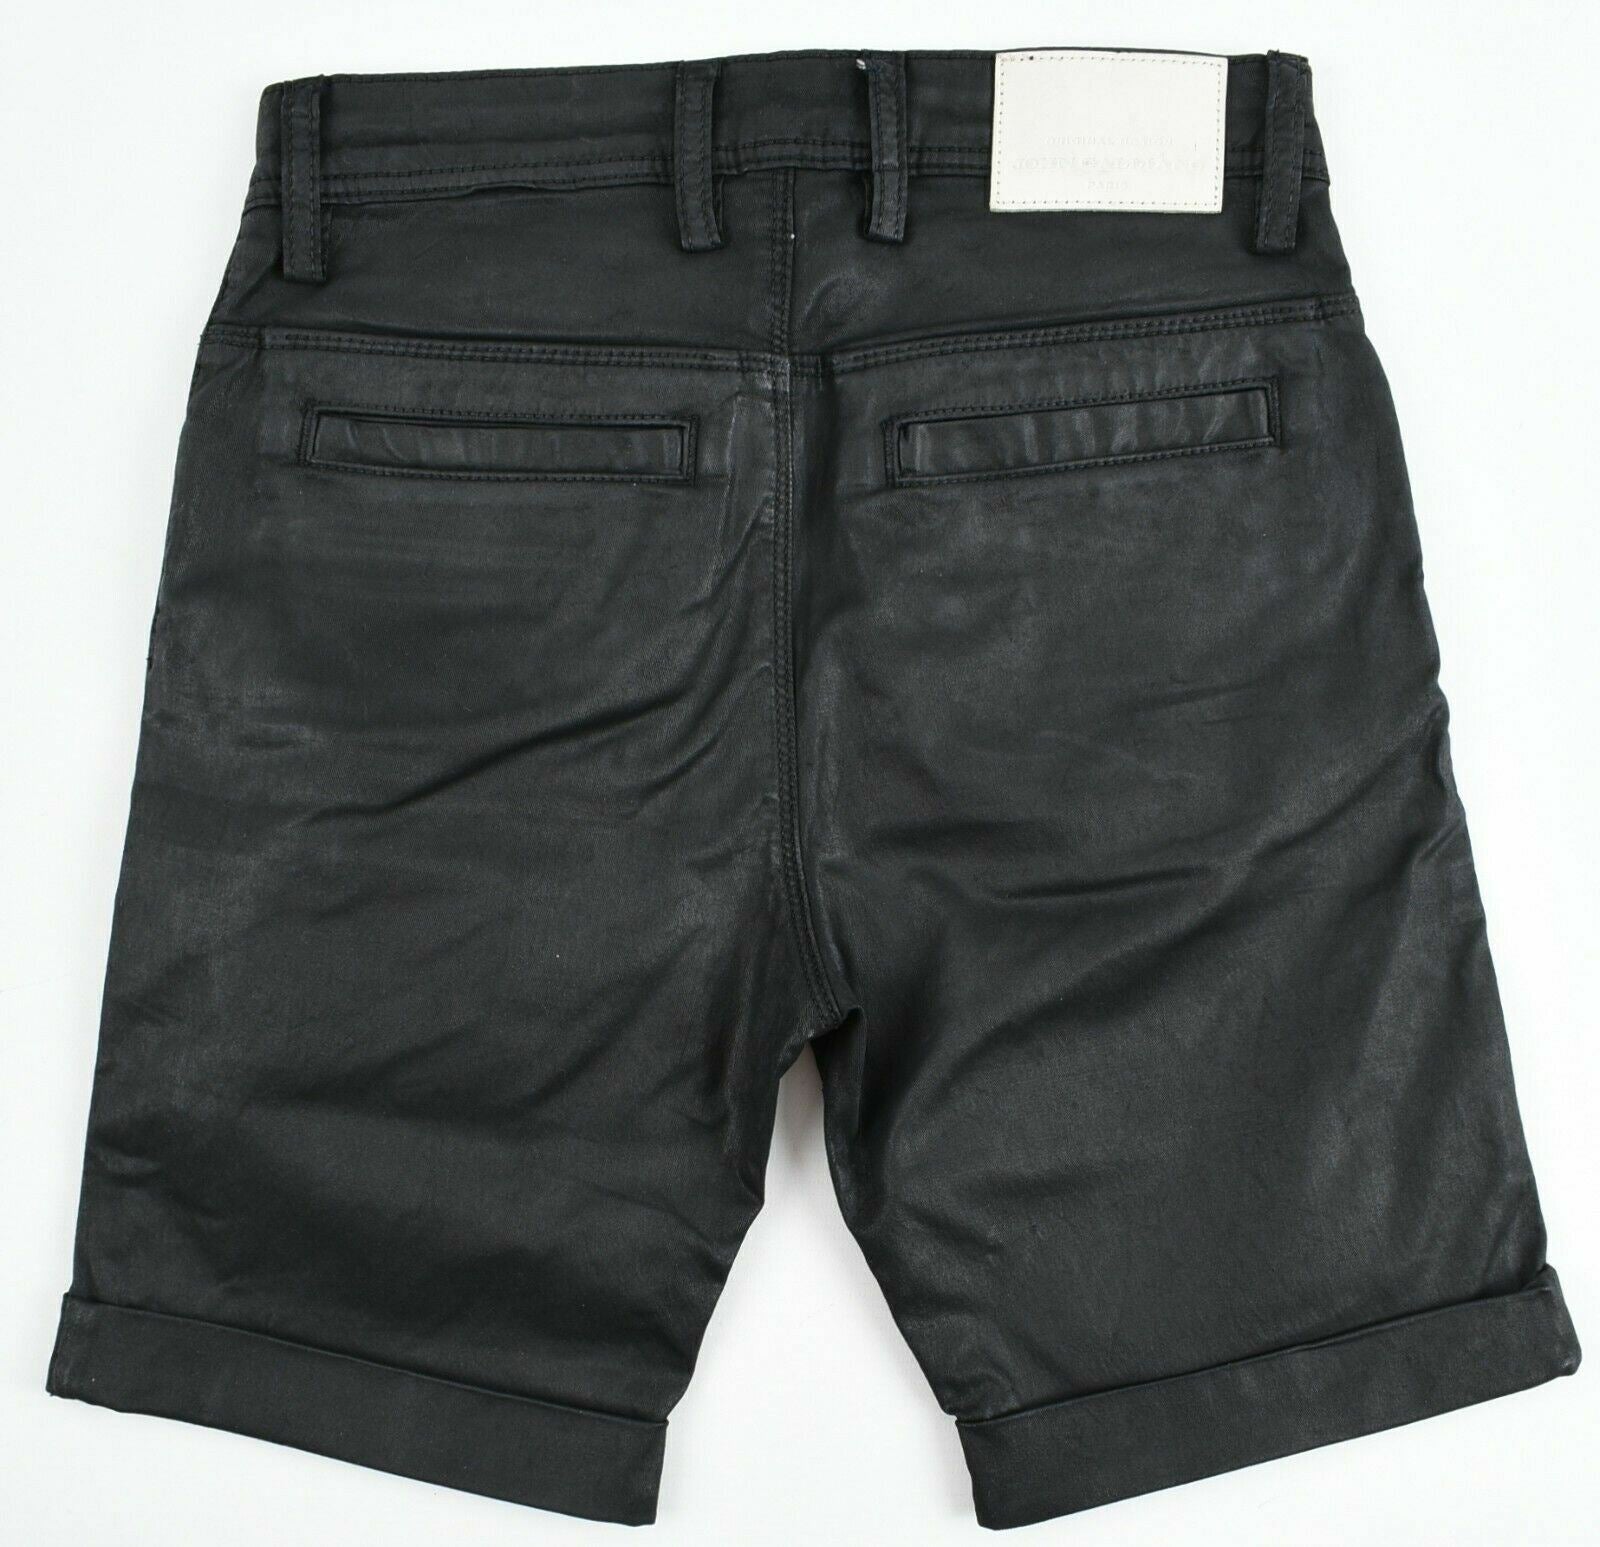 JOHN GALLIANO Girls' Kids' Waxed Cotton Shorts, Black, size 10 years